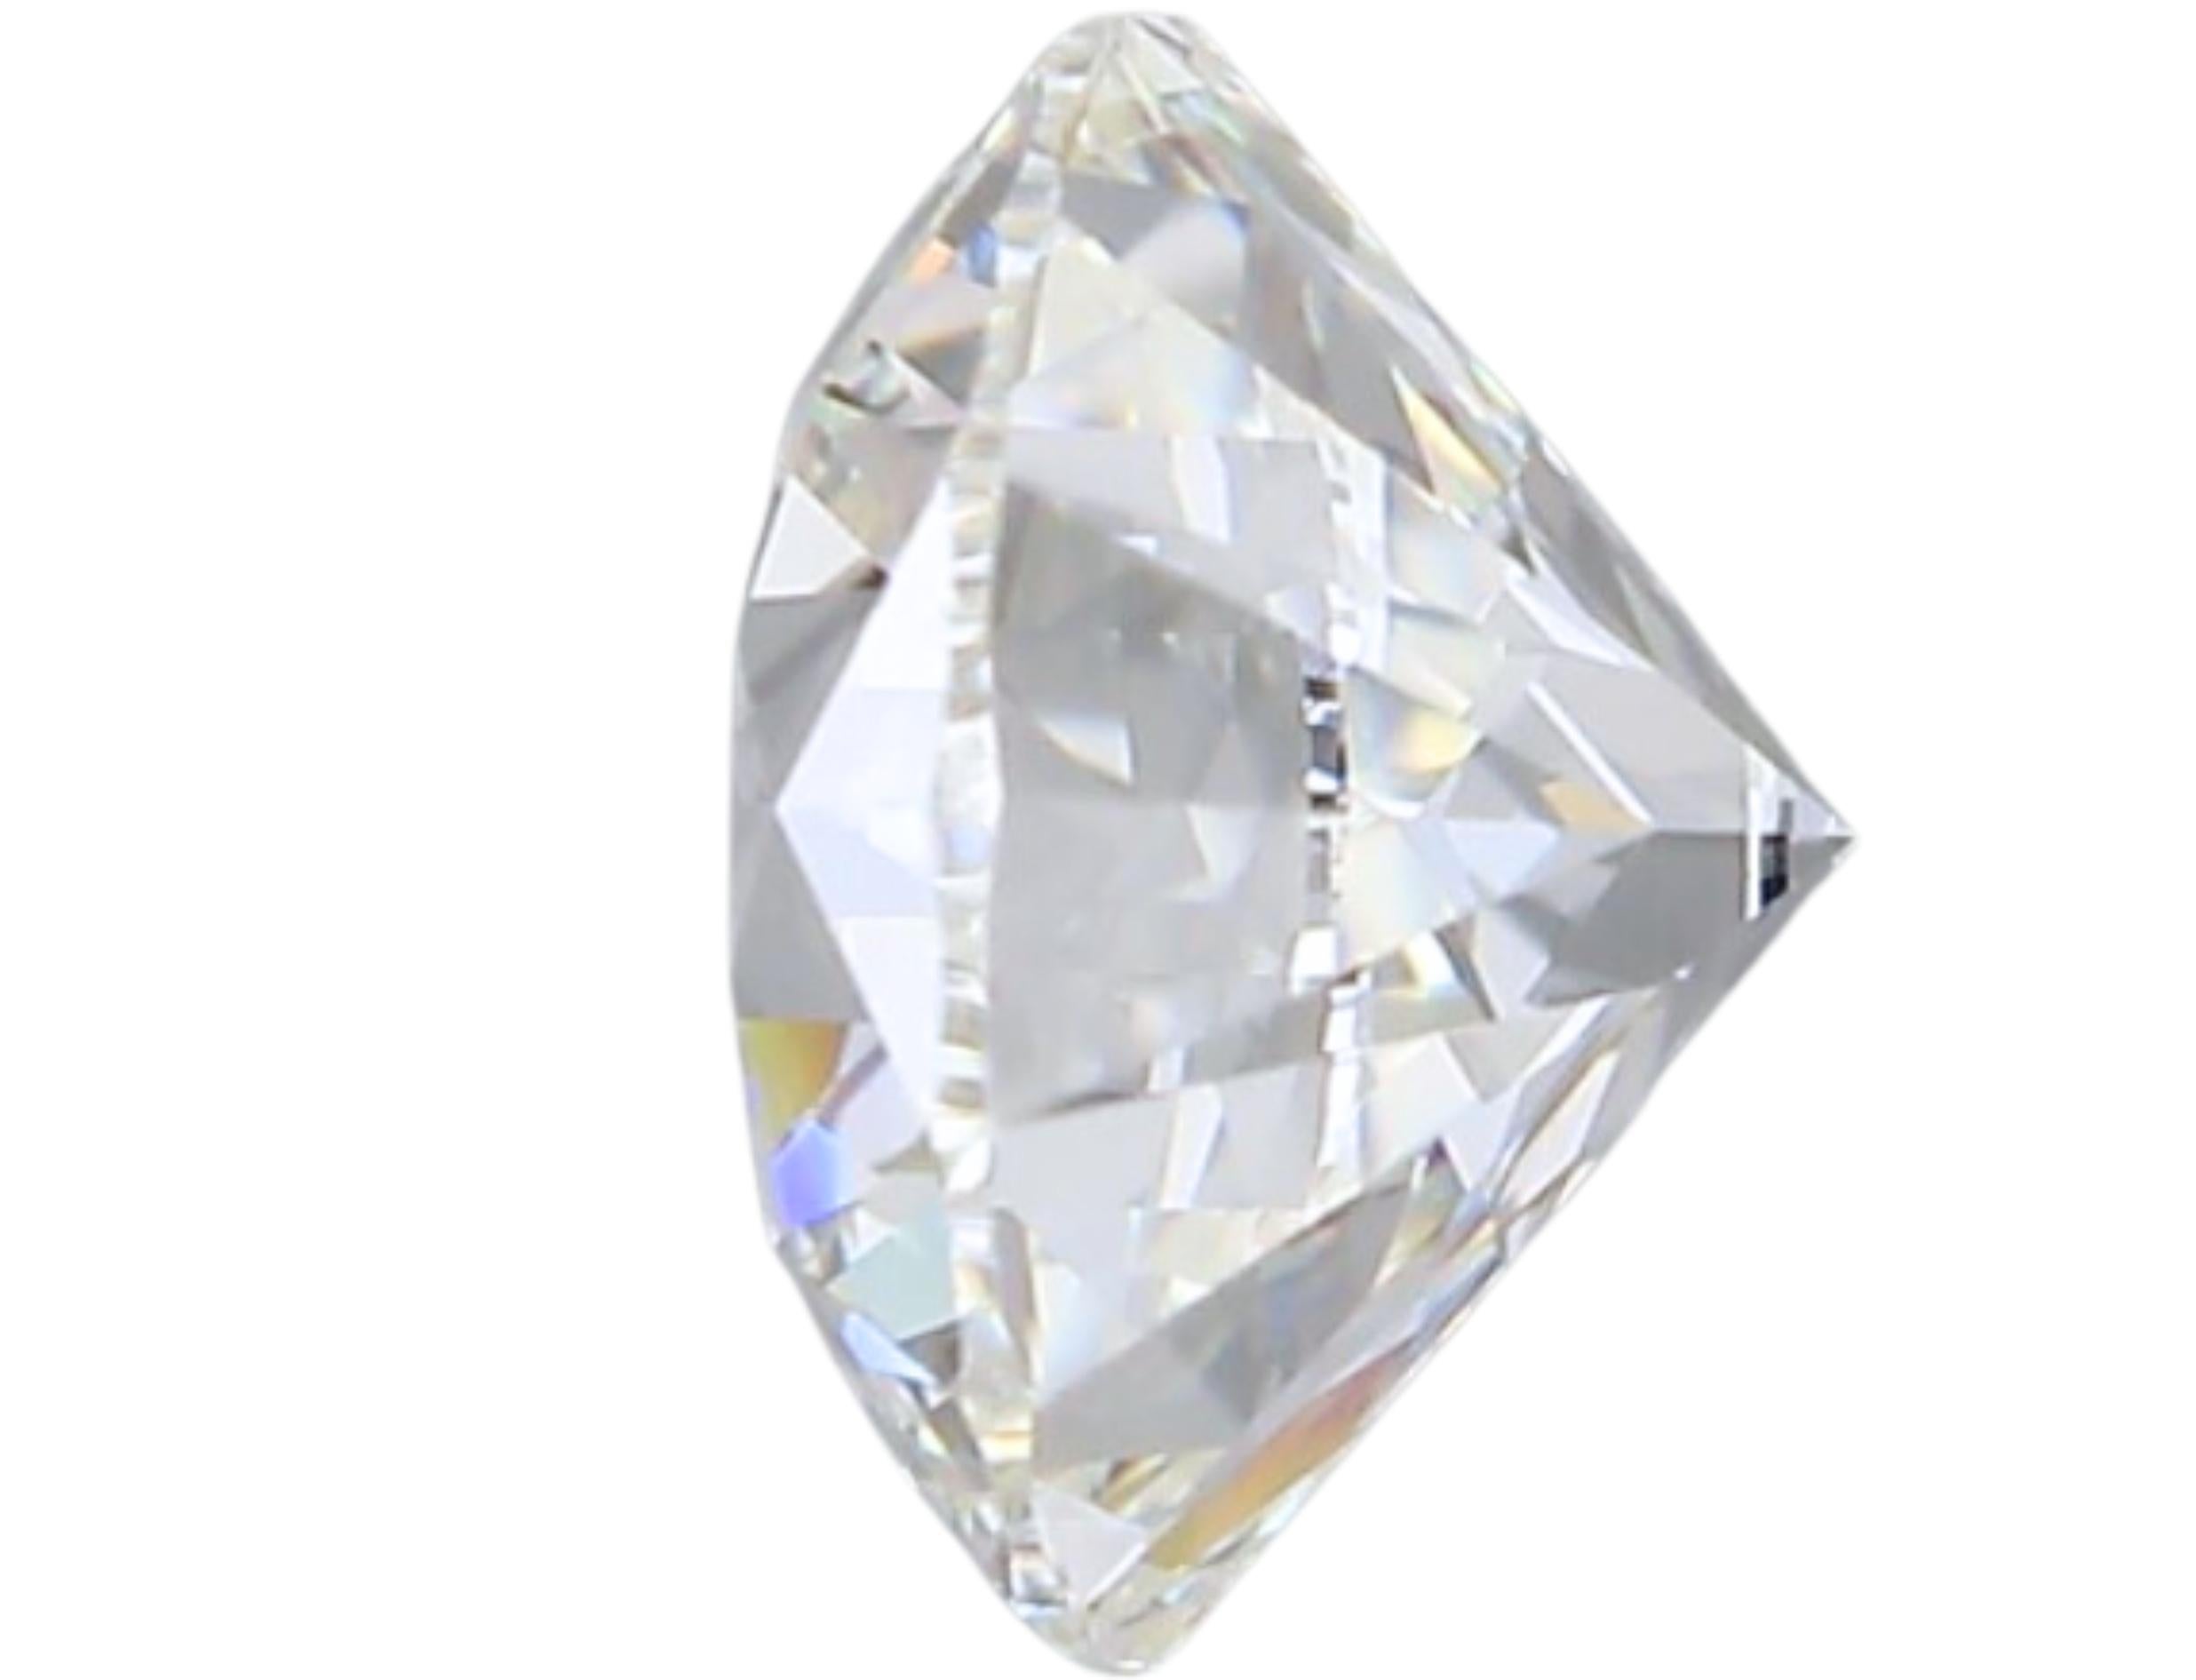 Taille ronde Superbe diamant naturel taille ronde de 0,90 ct en vente